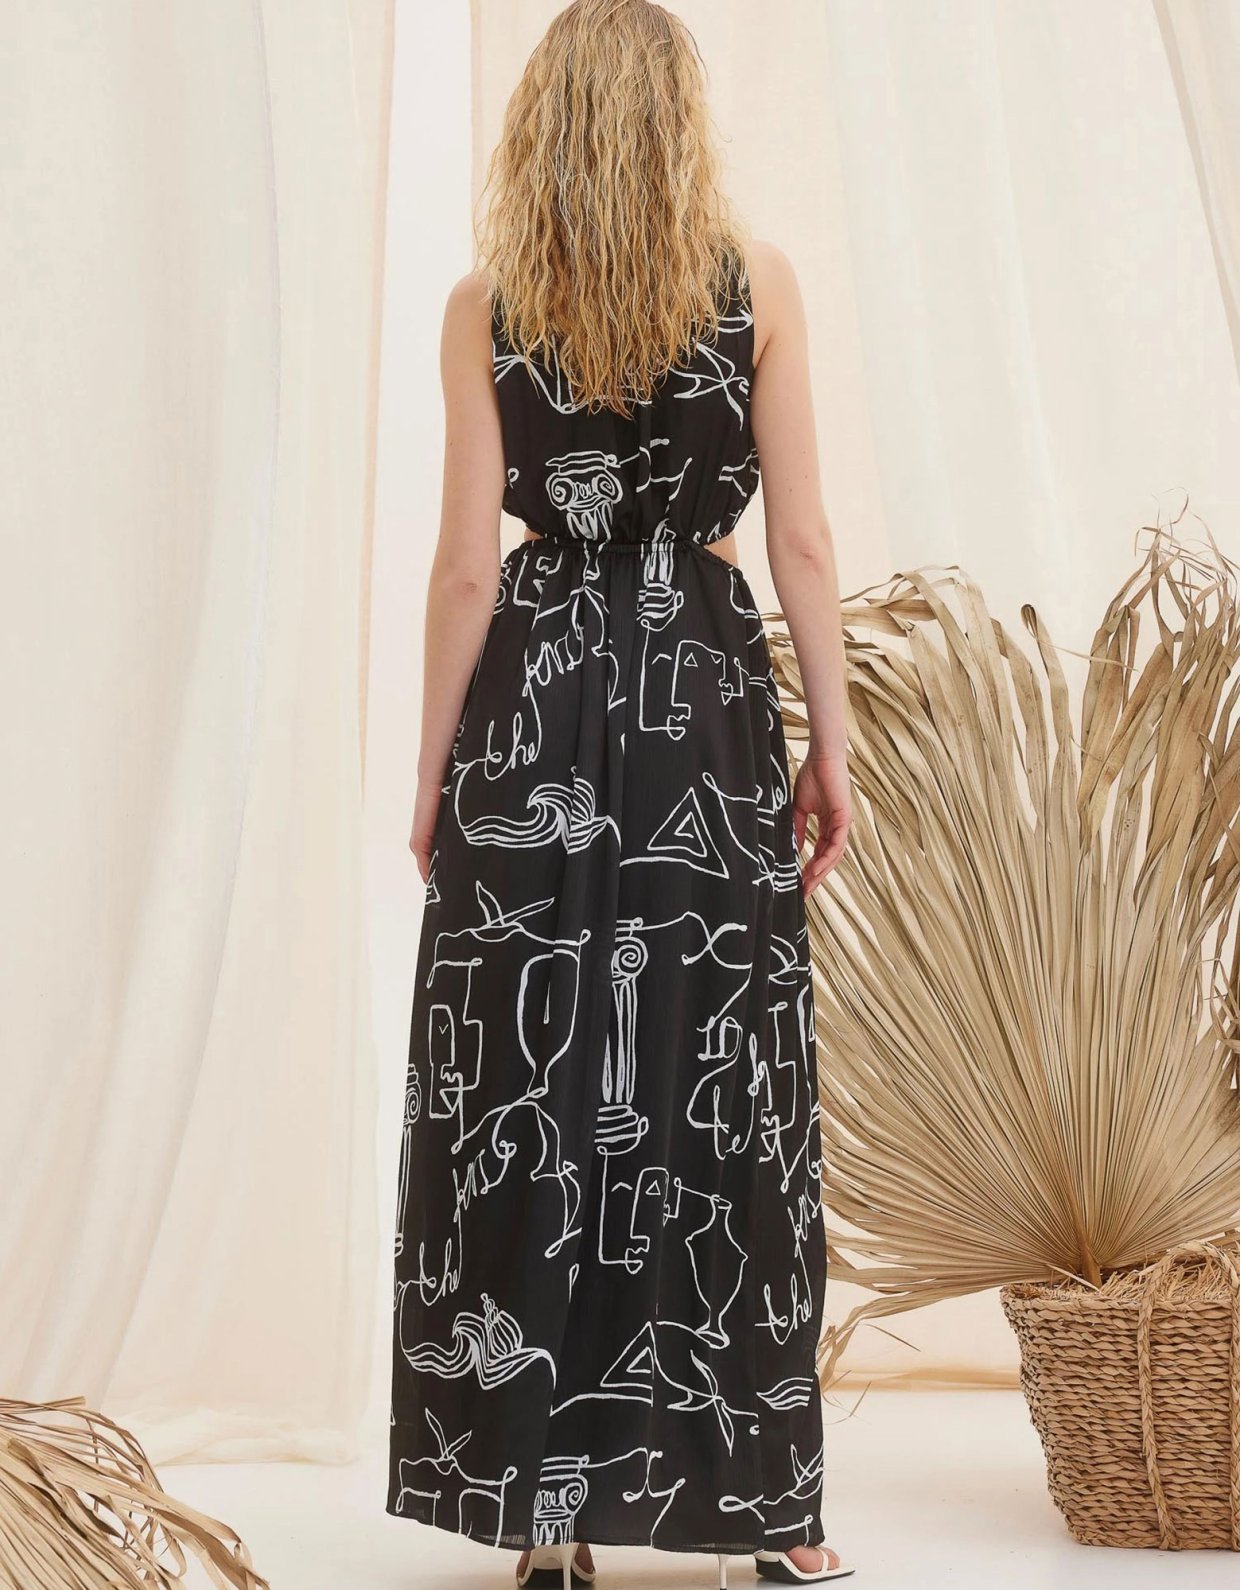 The Knl's Evadne printed black line dress